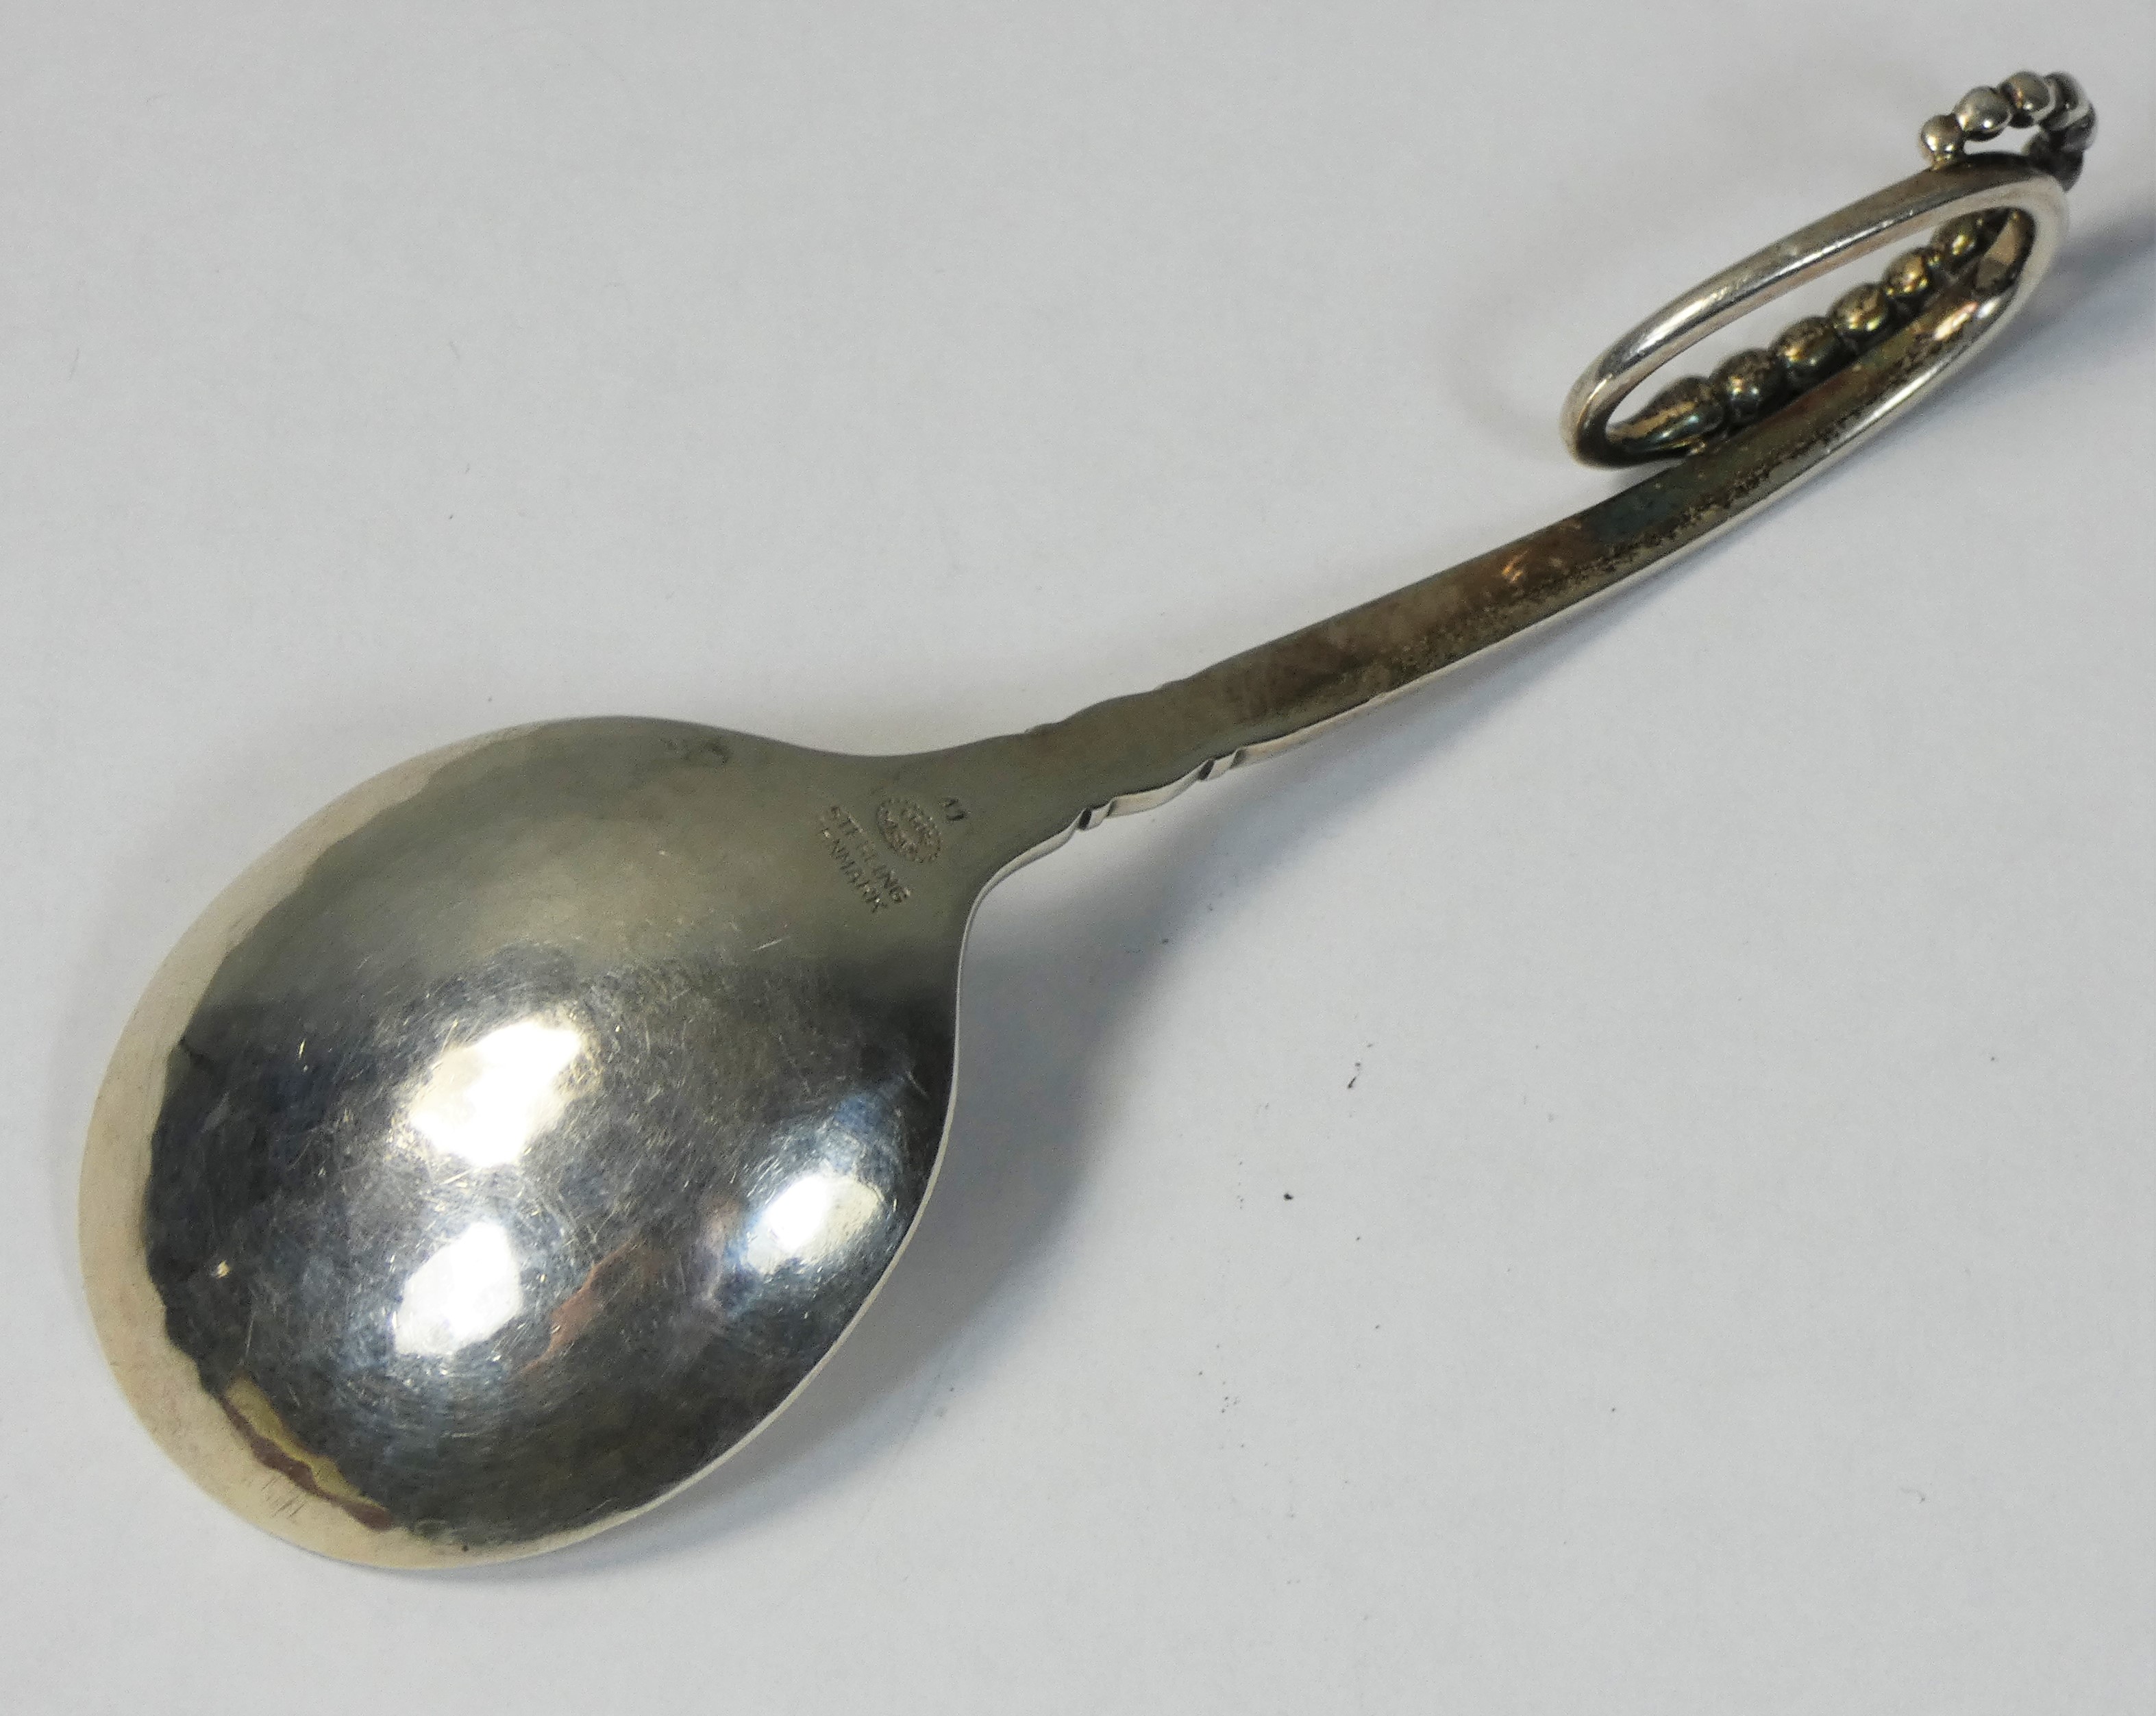 Georg Jensen, a Danish silver caddy or preserve spoon, Copenhagen, 1933-1944, pattern number 41, - Image 2 of 3